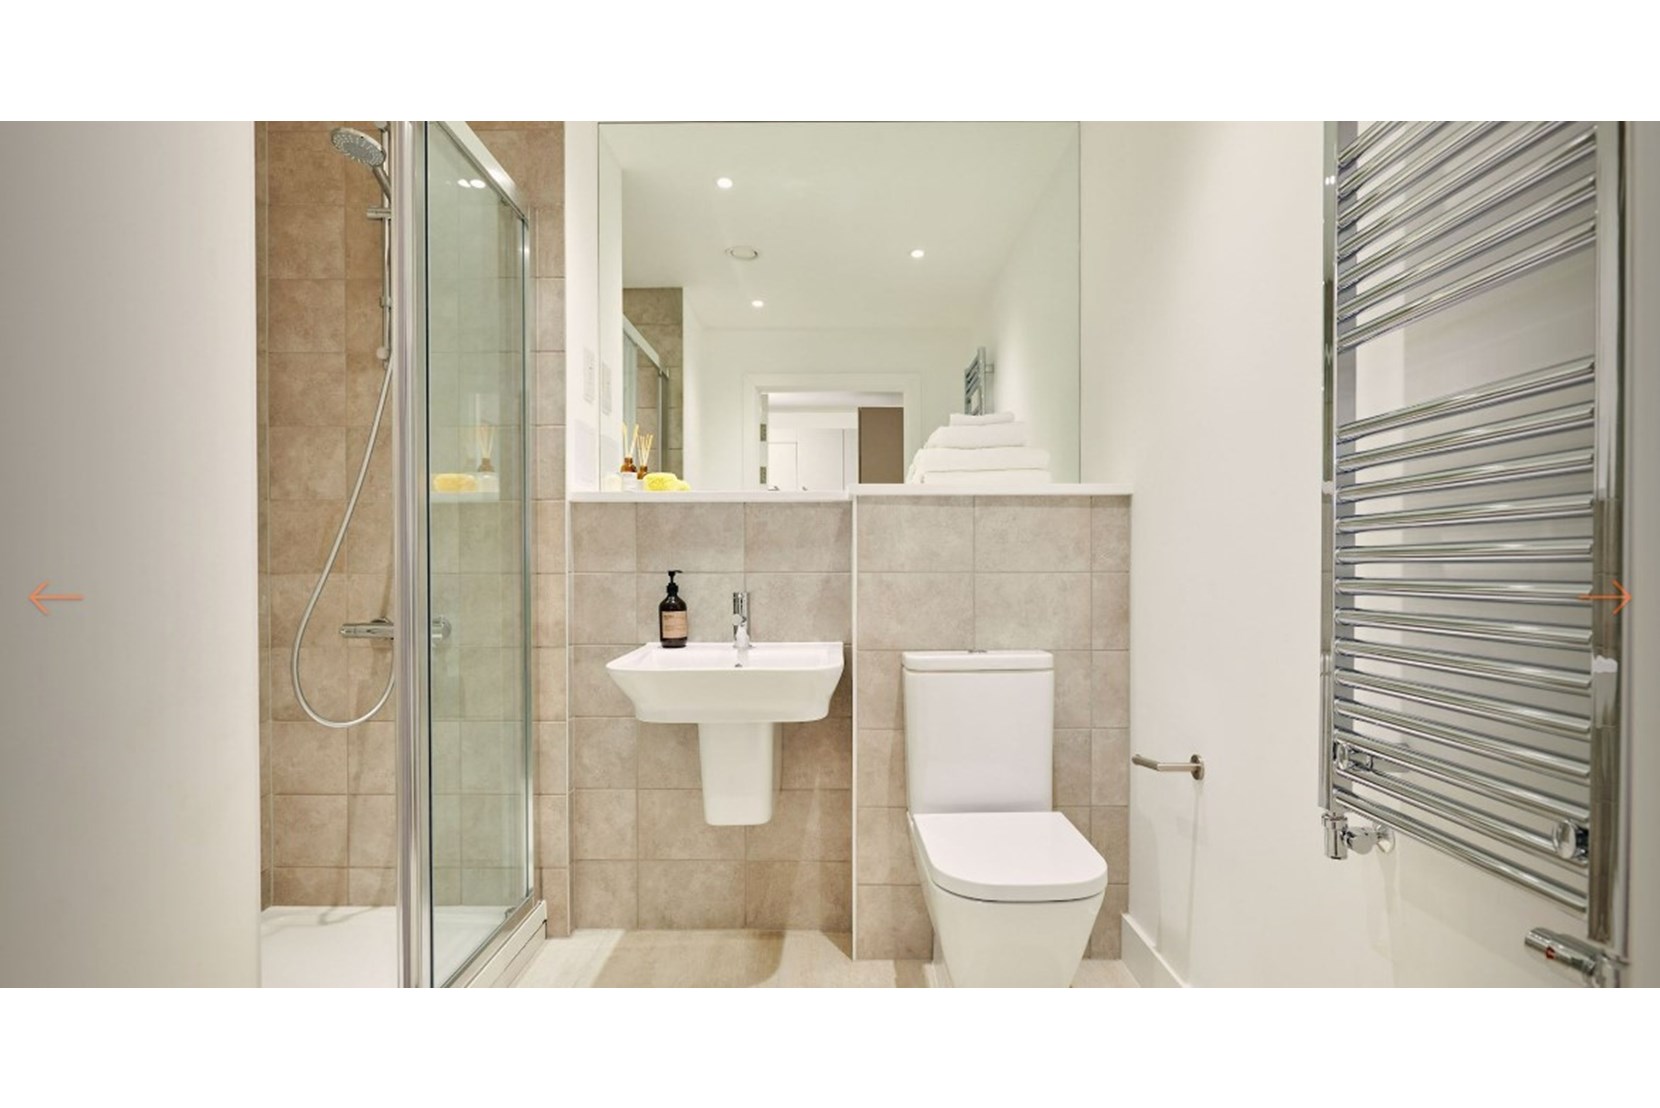 Apartment-APO-Group-Barking-Greater-London-interior-bathroom